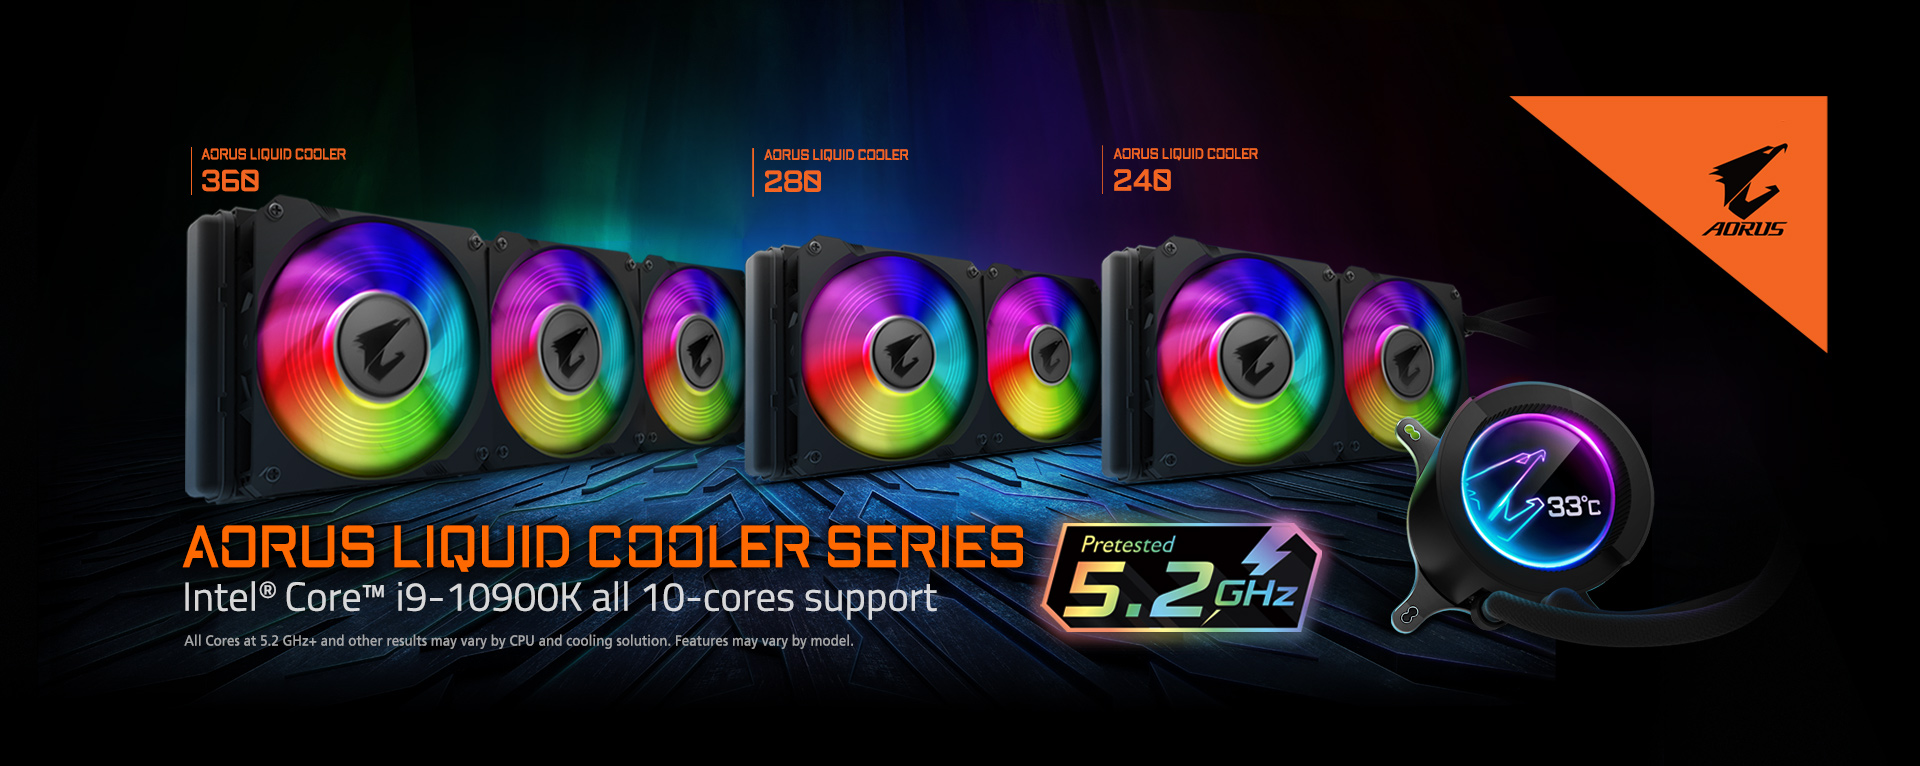 AORUS RGB Liquid Cooler 280 - Liquid cooling system CPU water block - LGA1151 Socket / LGA1155